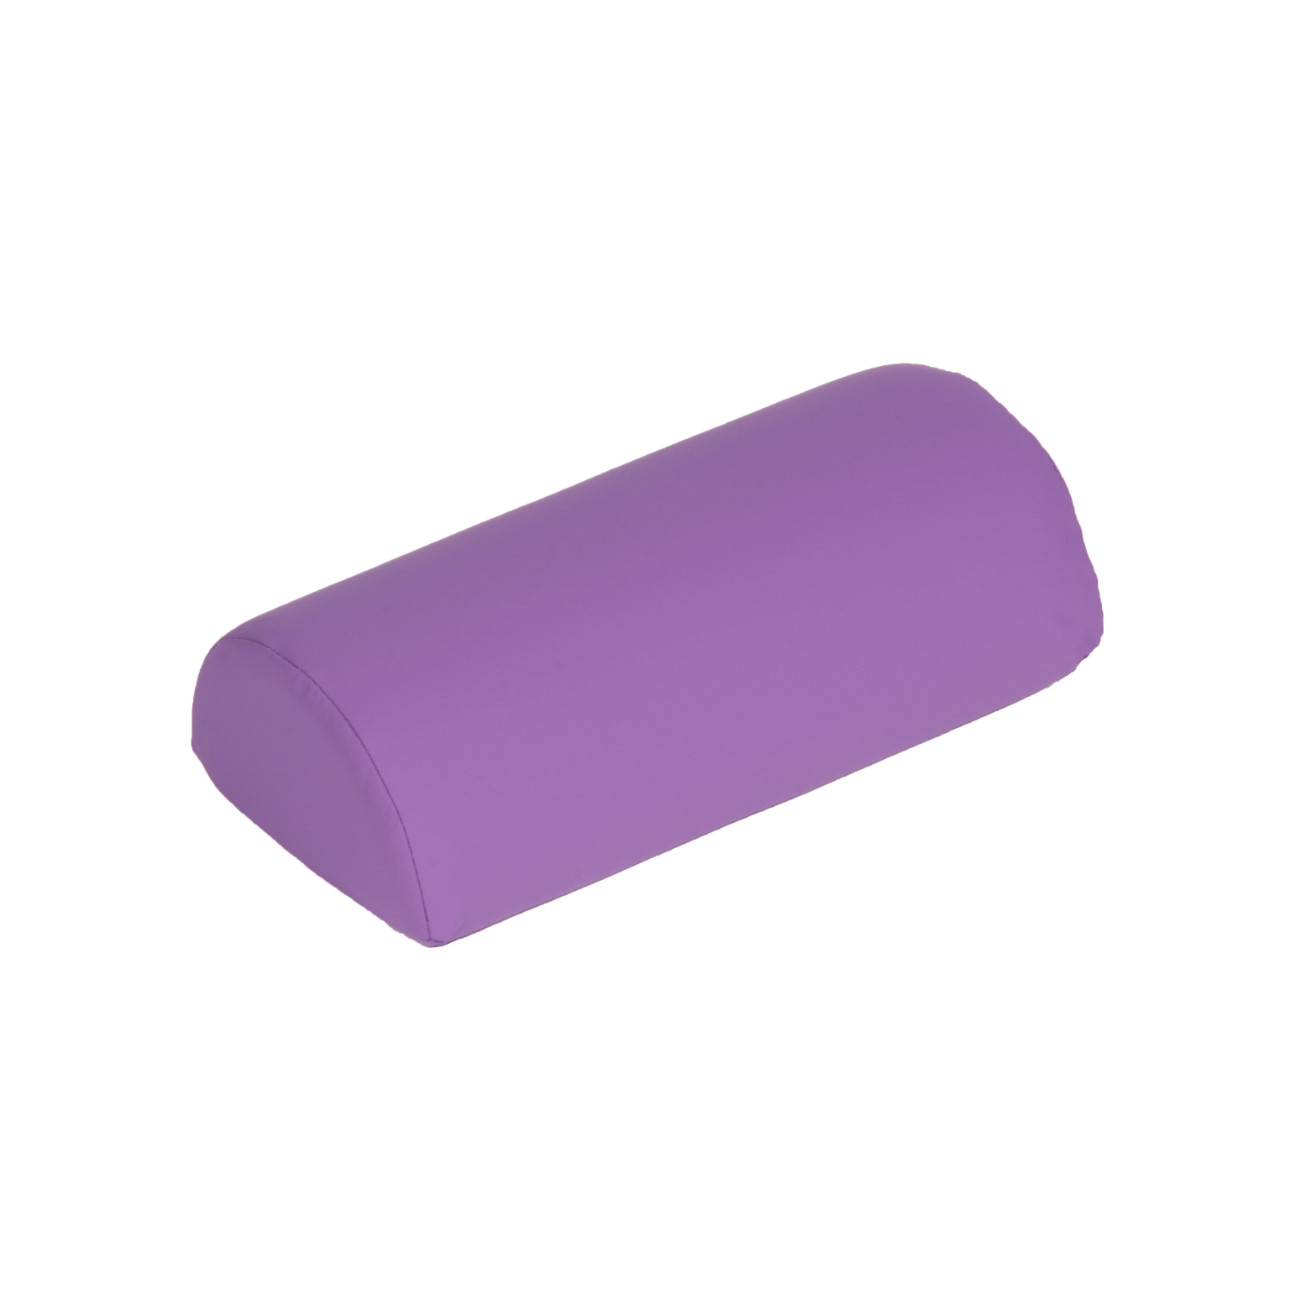 PurplePos Halbrolle | Lagerungshalbrolle